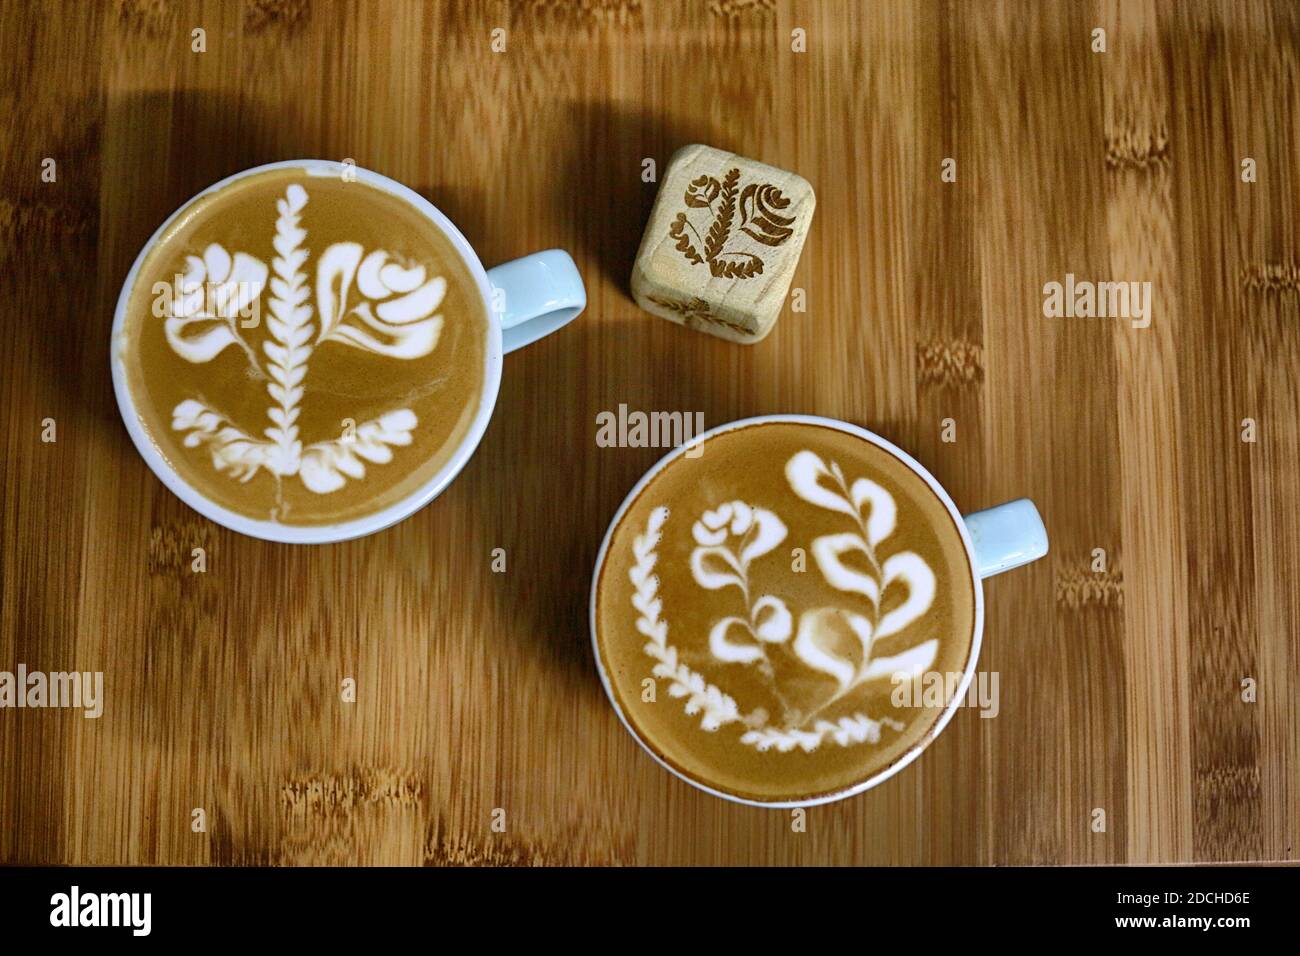 Latte art dice and latte art on wood table Stock Photo